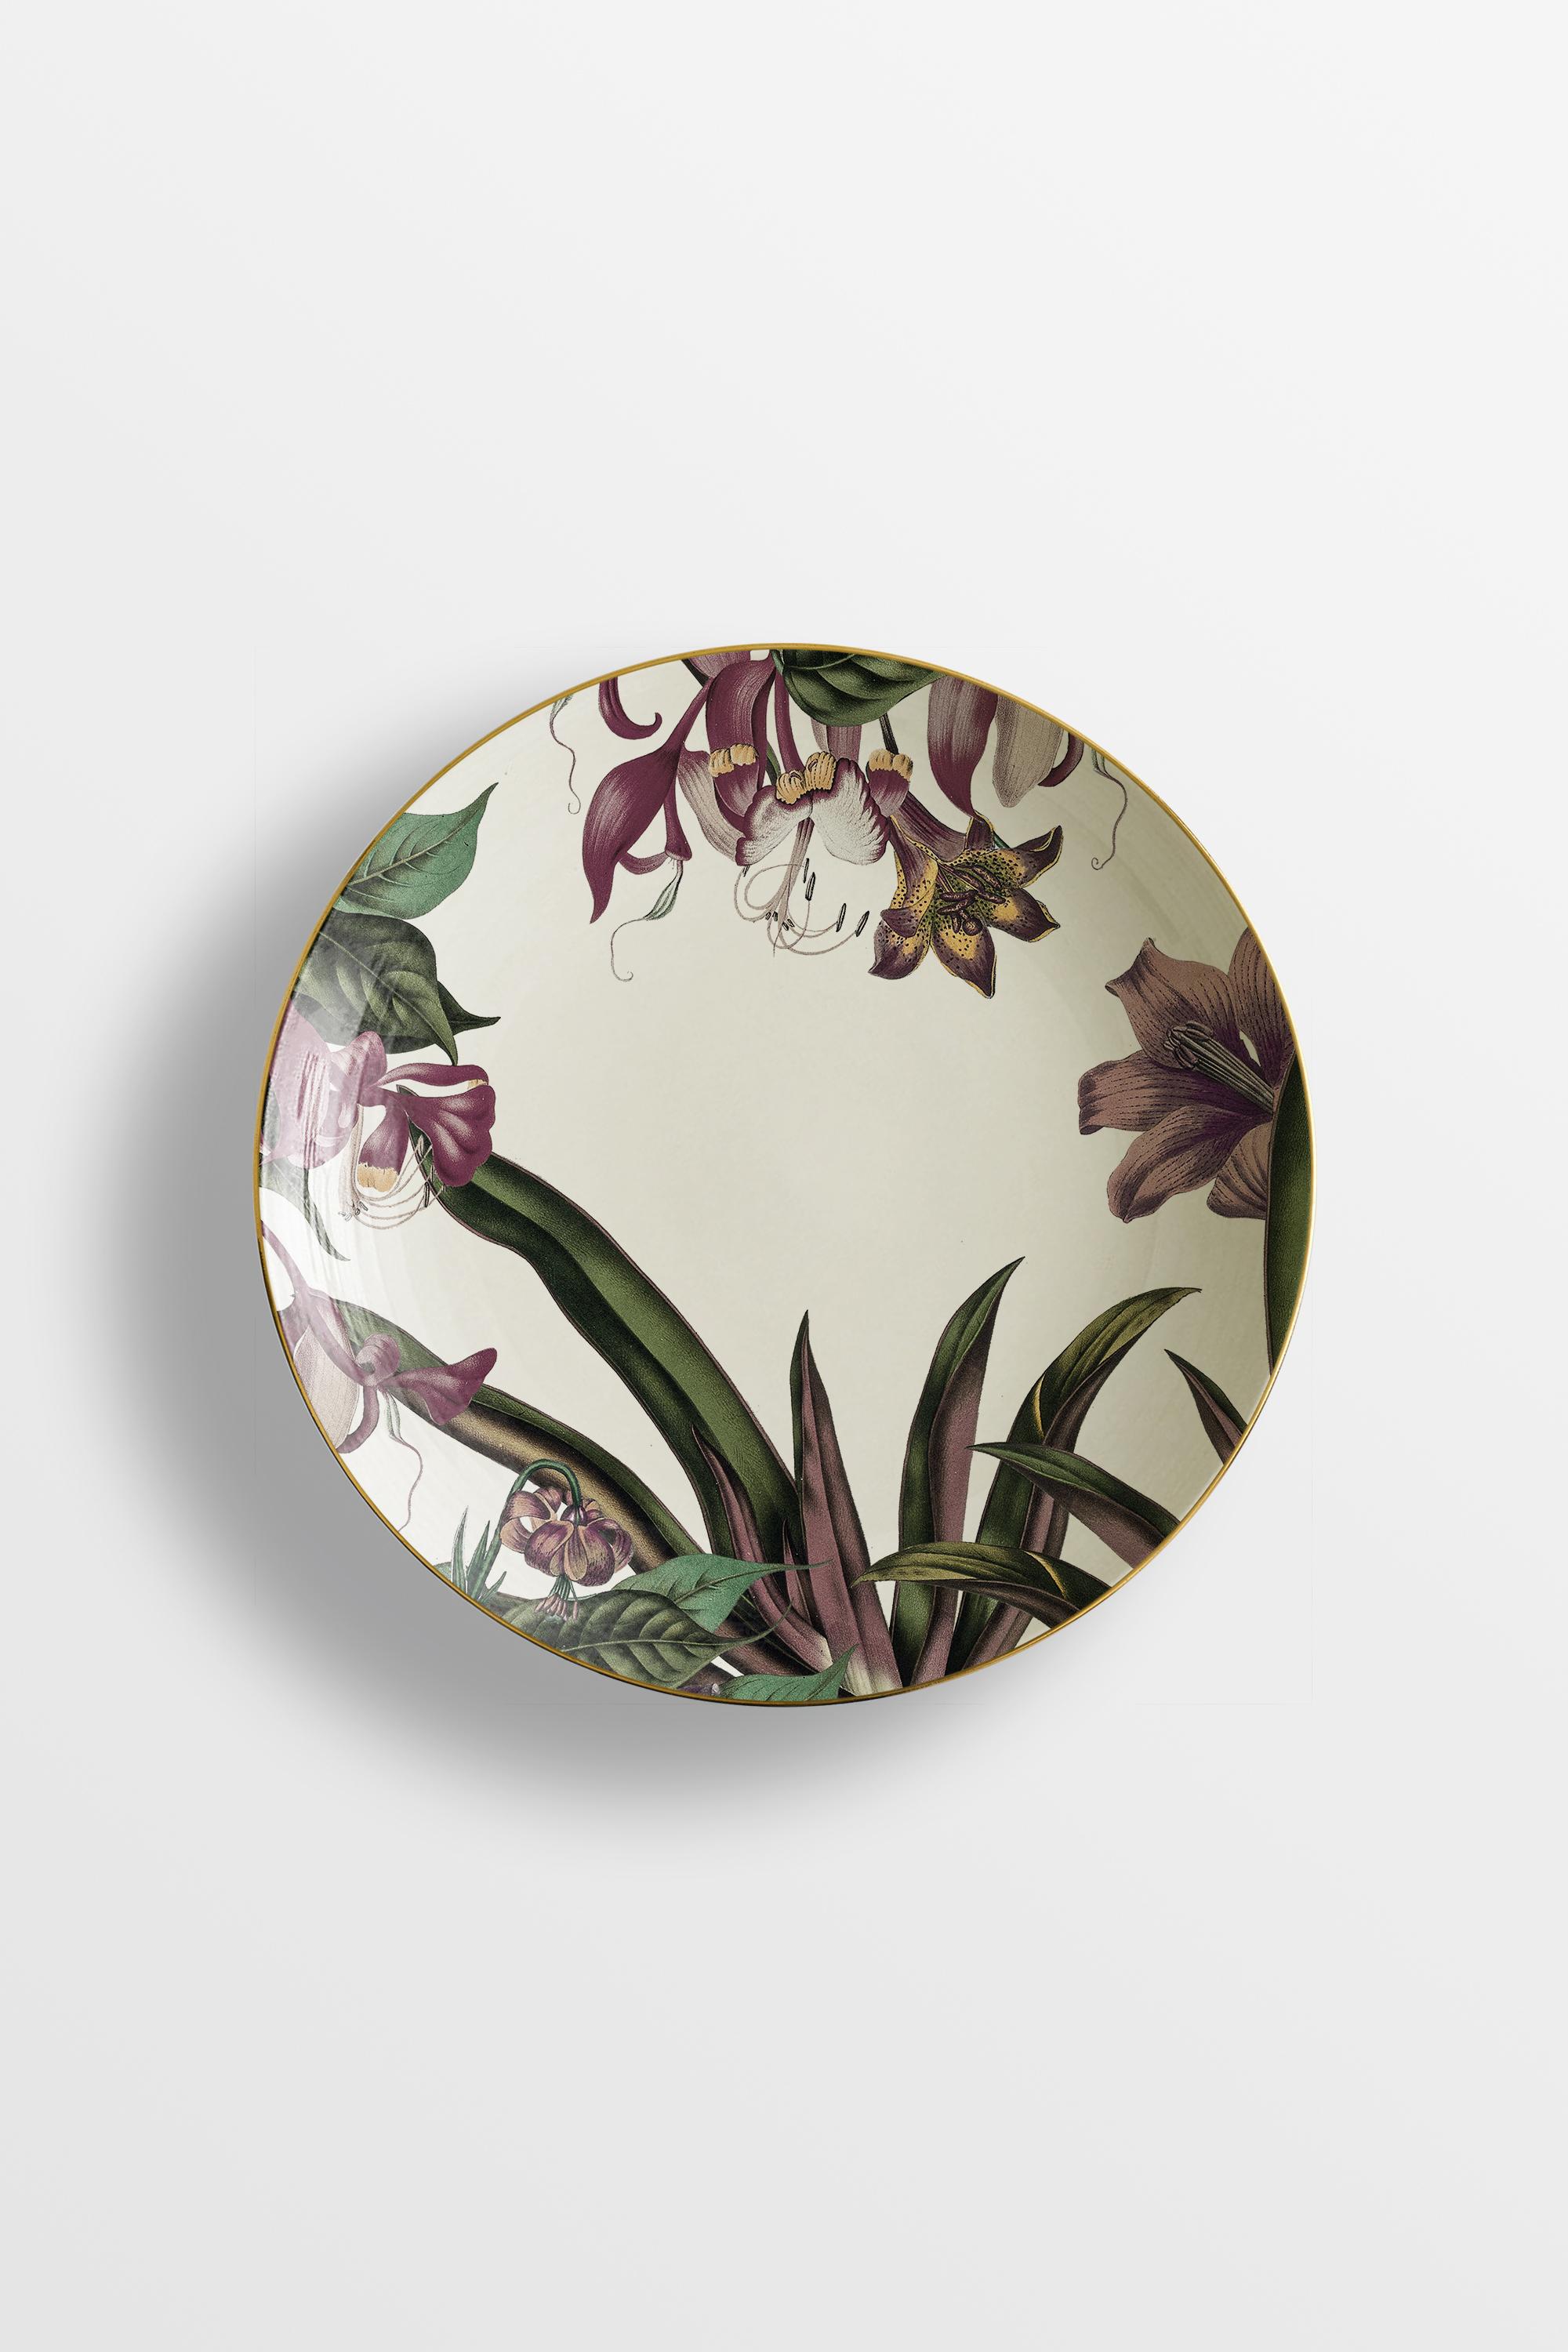 Animalia, Six Contemporary Porcelain Soup Plates with Decorative Design For Sale 1